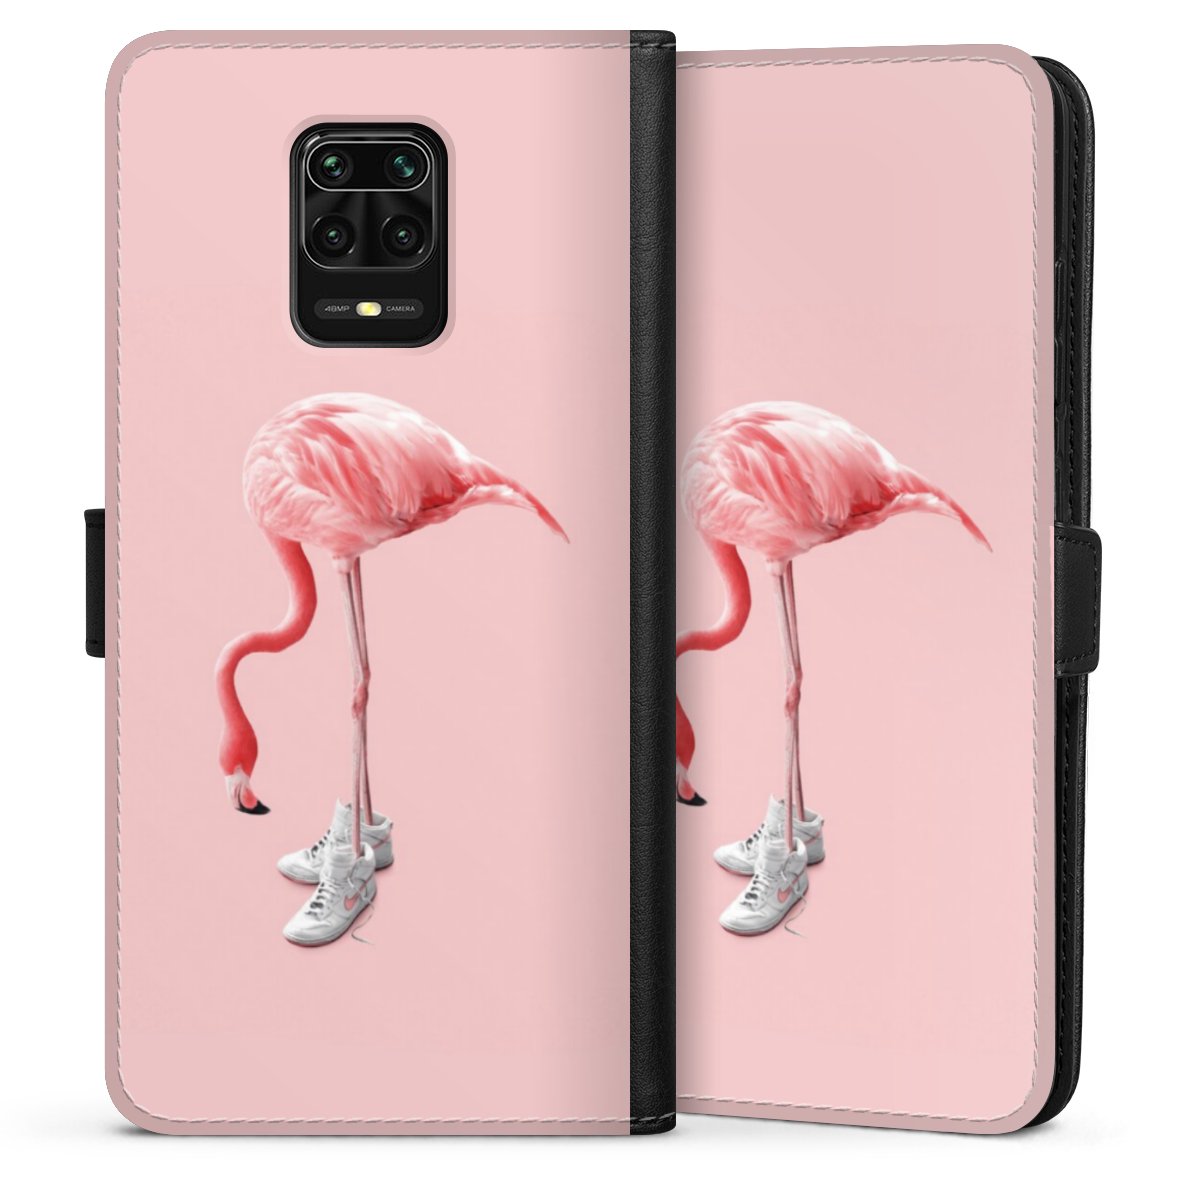 Sneaker Flamingo